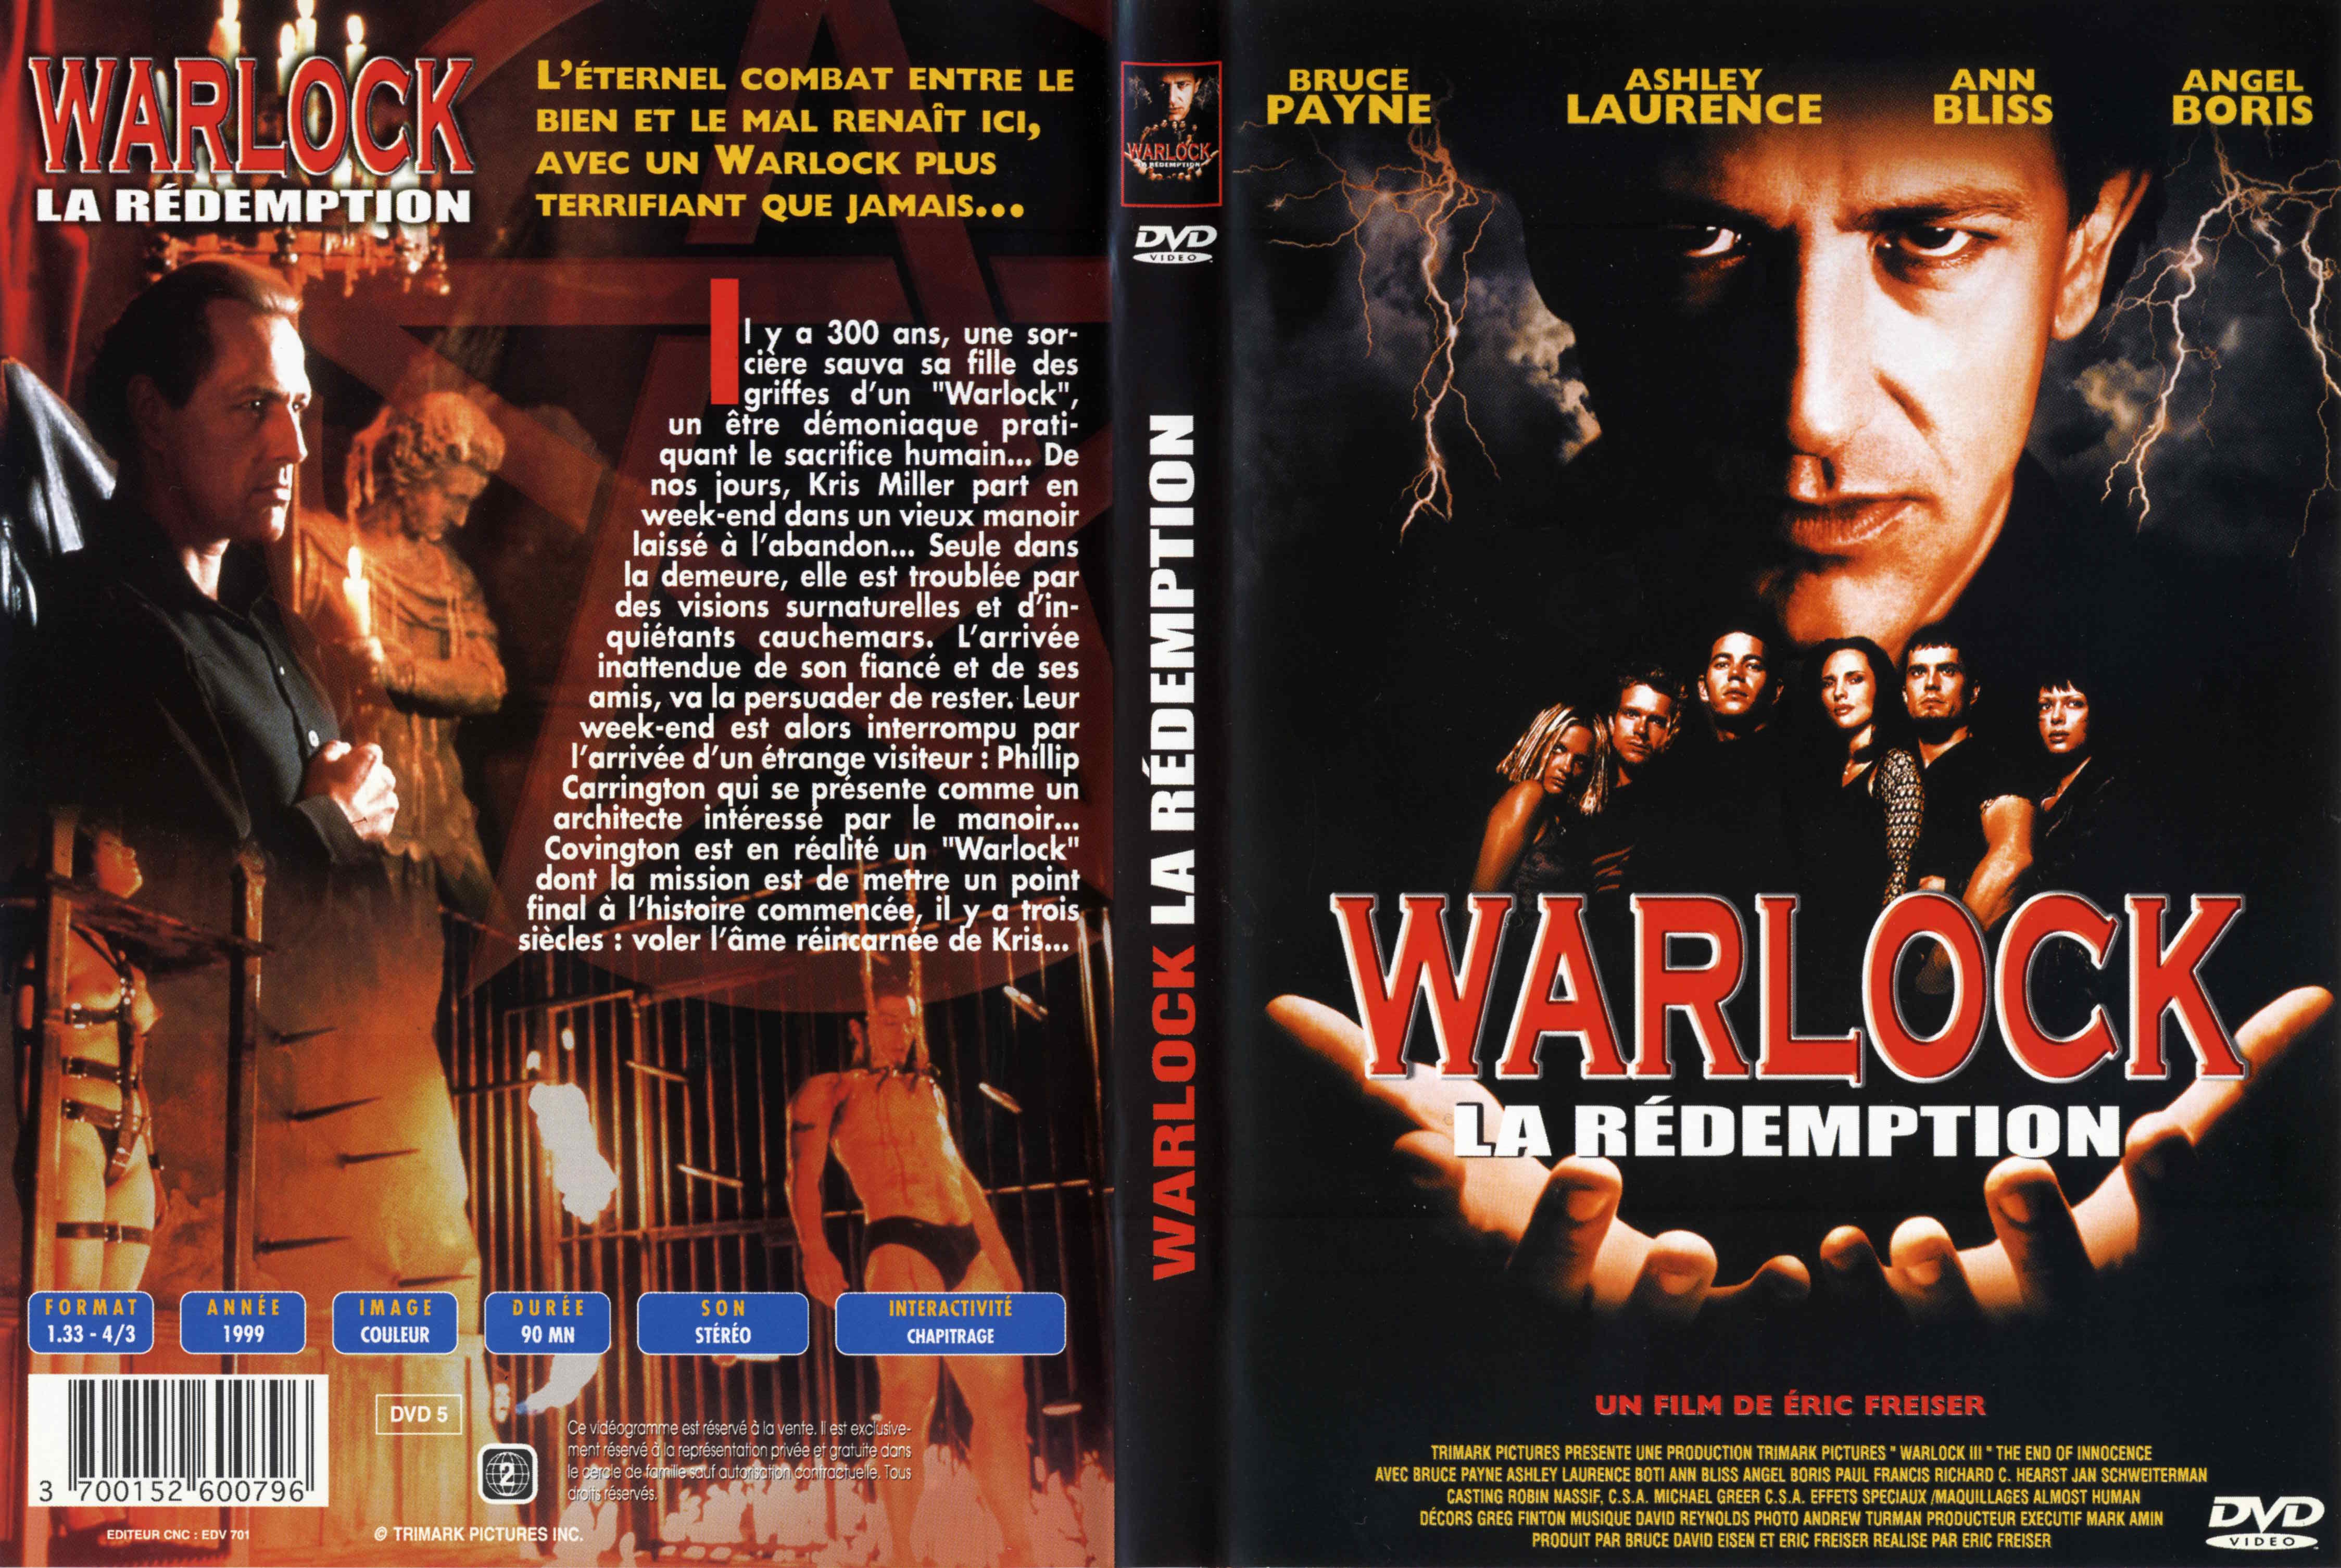 Jaquette DVD Warlock la rdemption v2